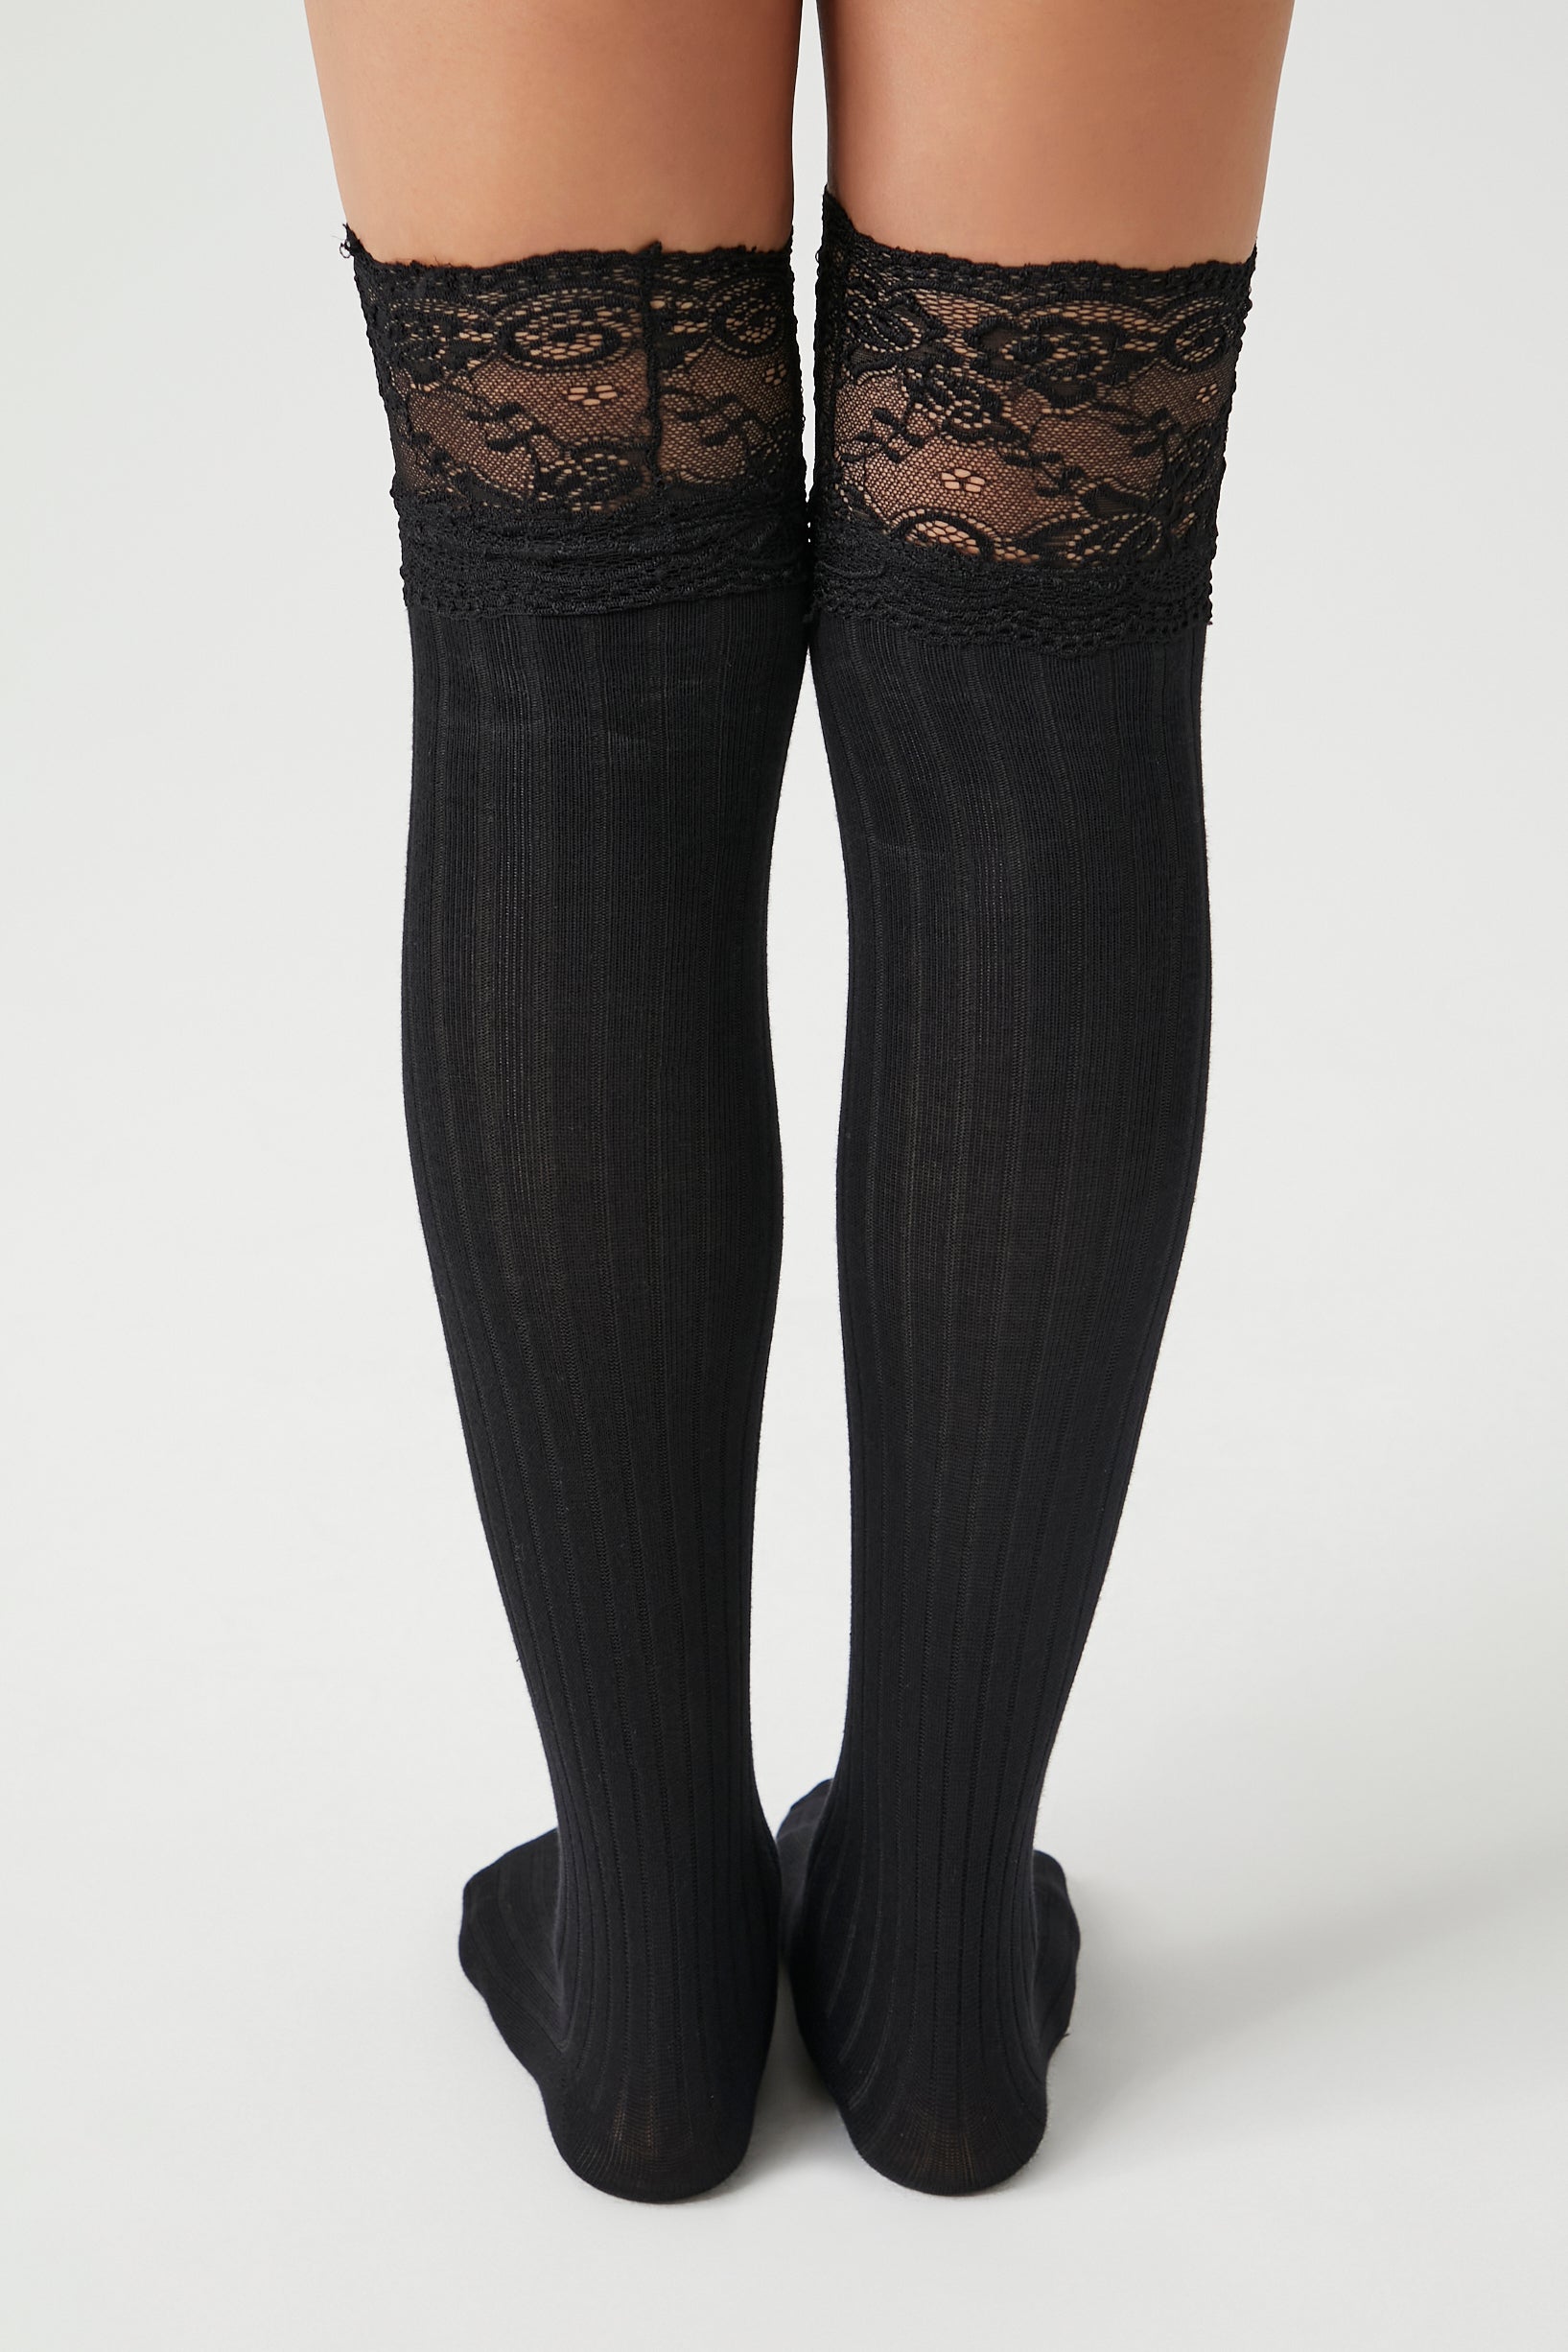 Black Lace-Trim Over-the-Knee Socks 3